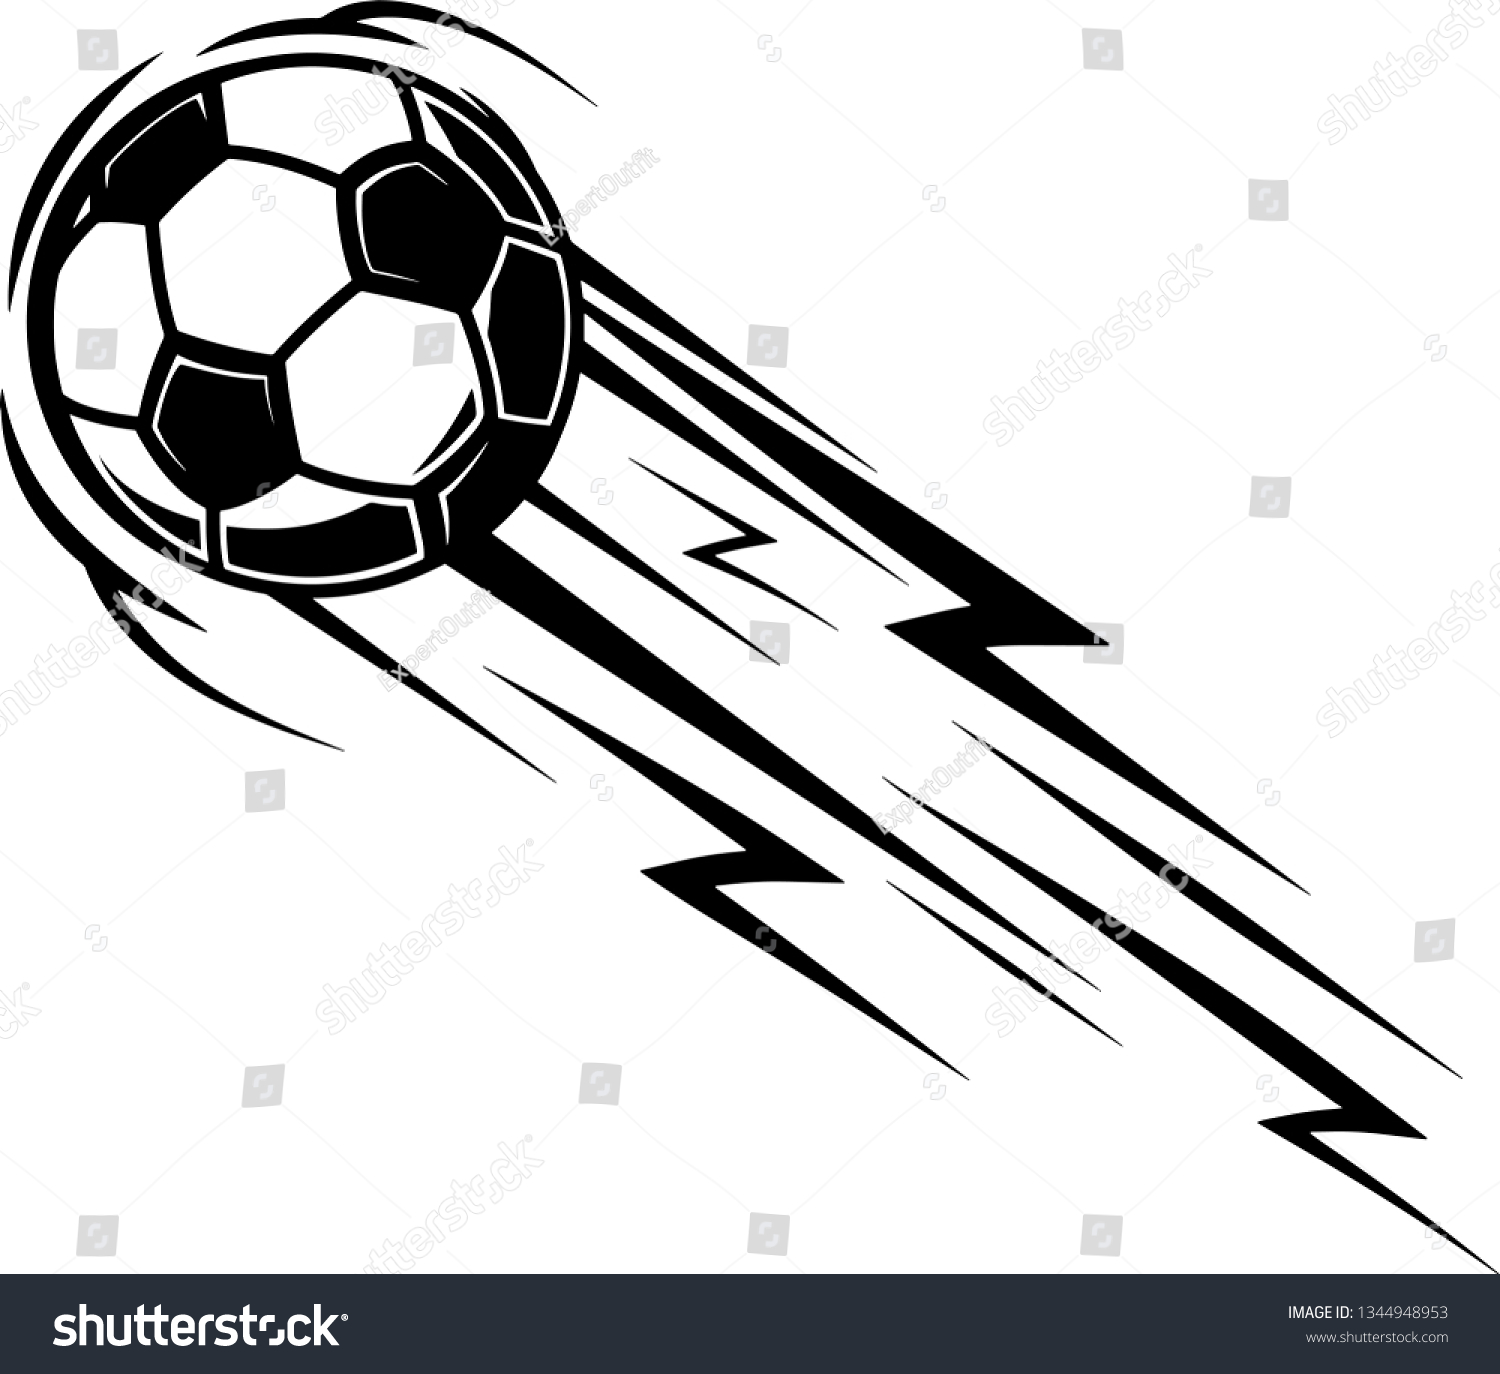 soccer ball that tracks speed